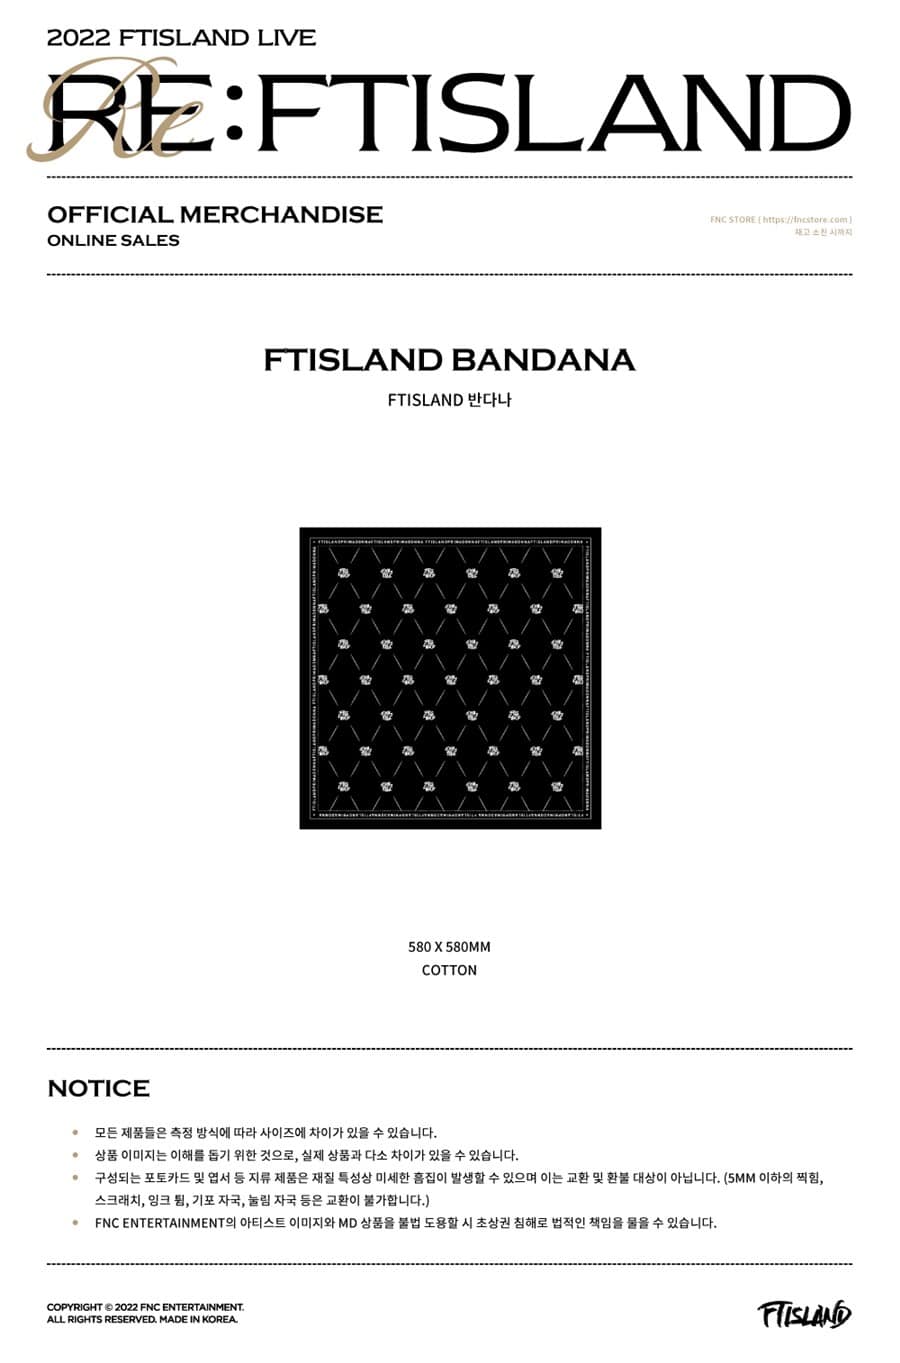 ftisland-live-re-ftisland-official-md-bandana-wholesales